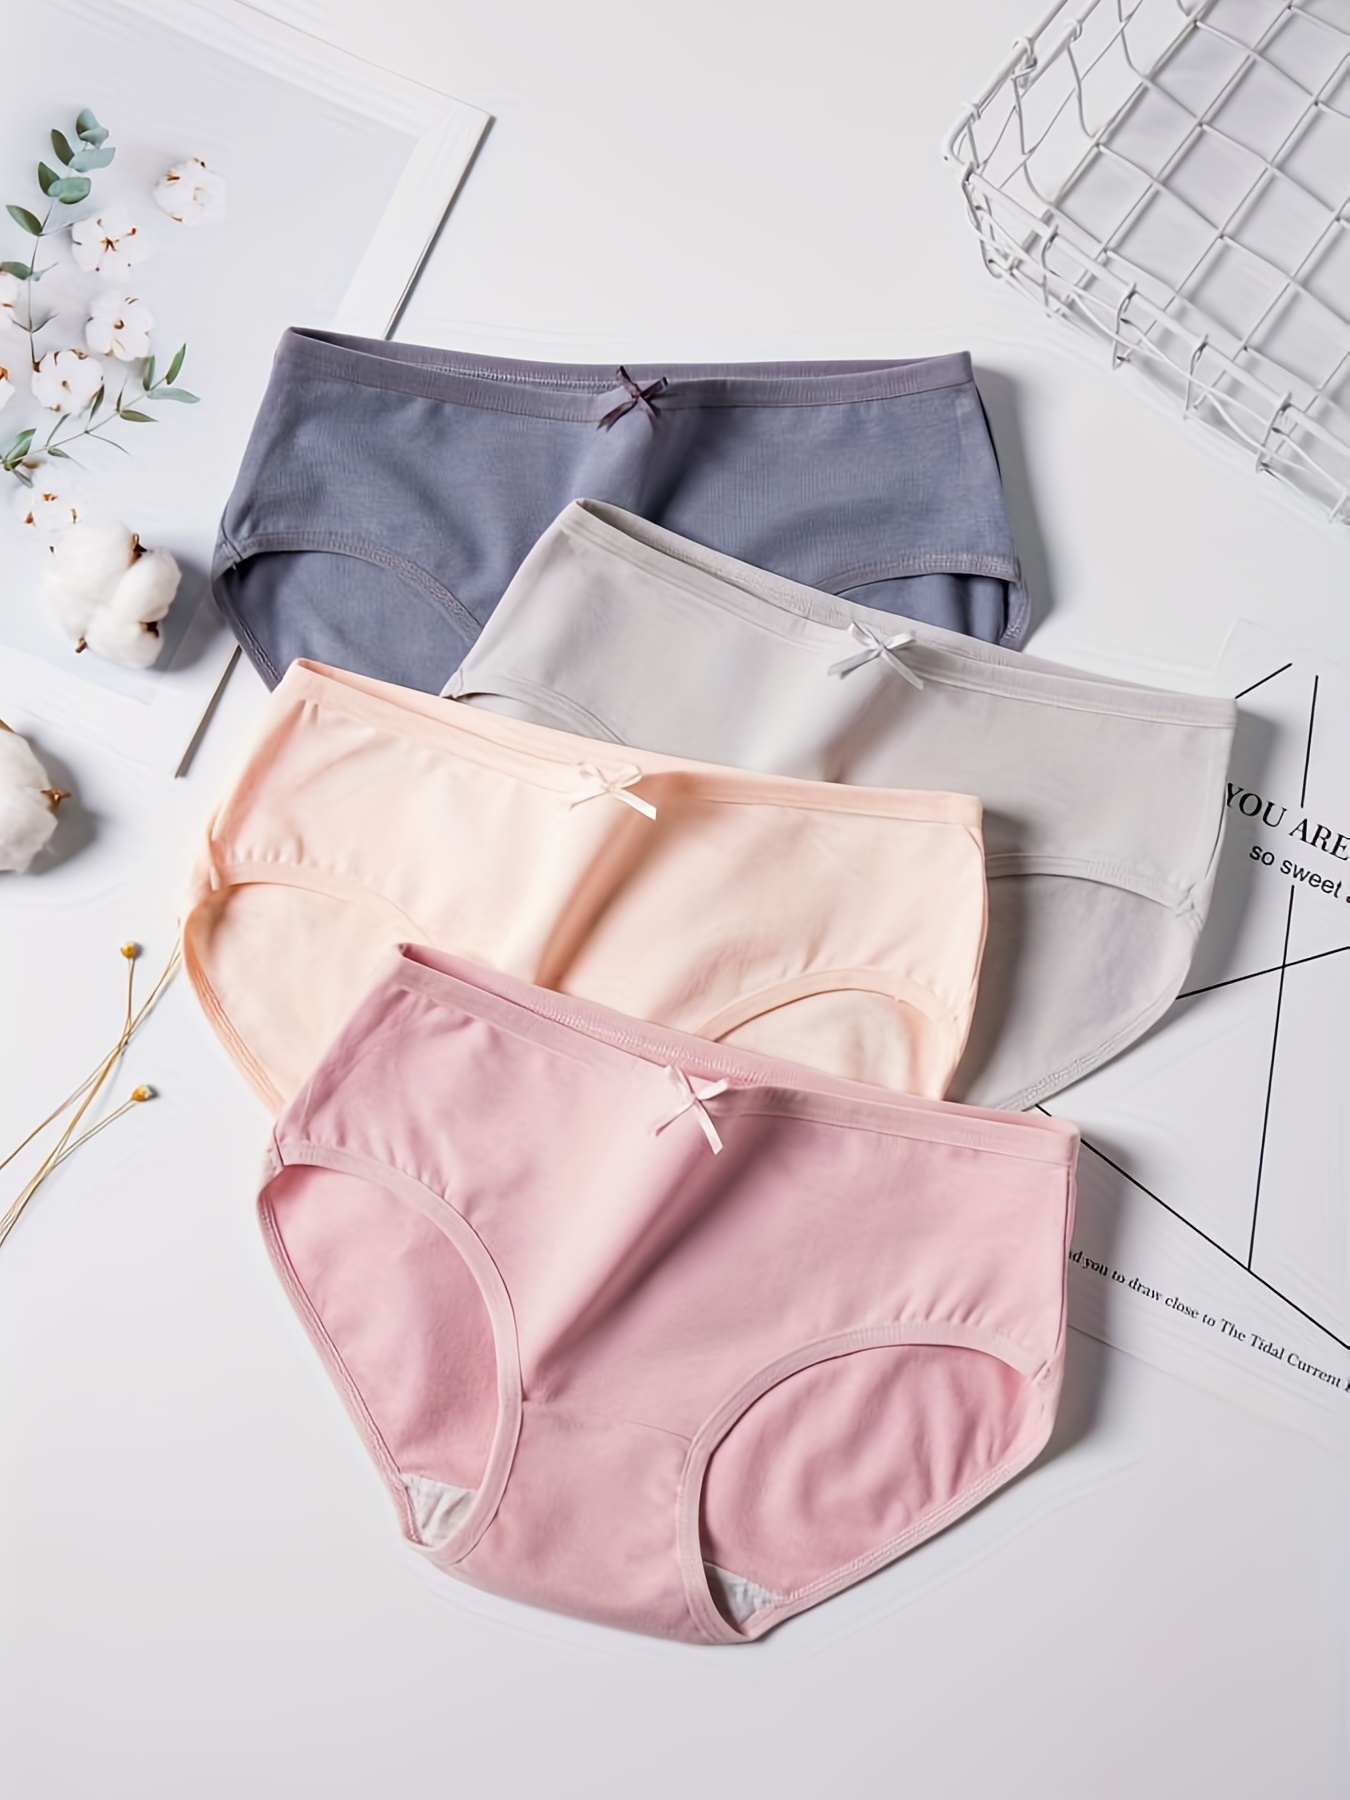 7pcs/lot Disposable Panties Maternity Underwear Panties/Women's